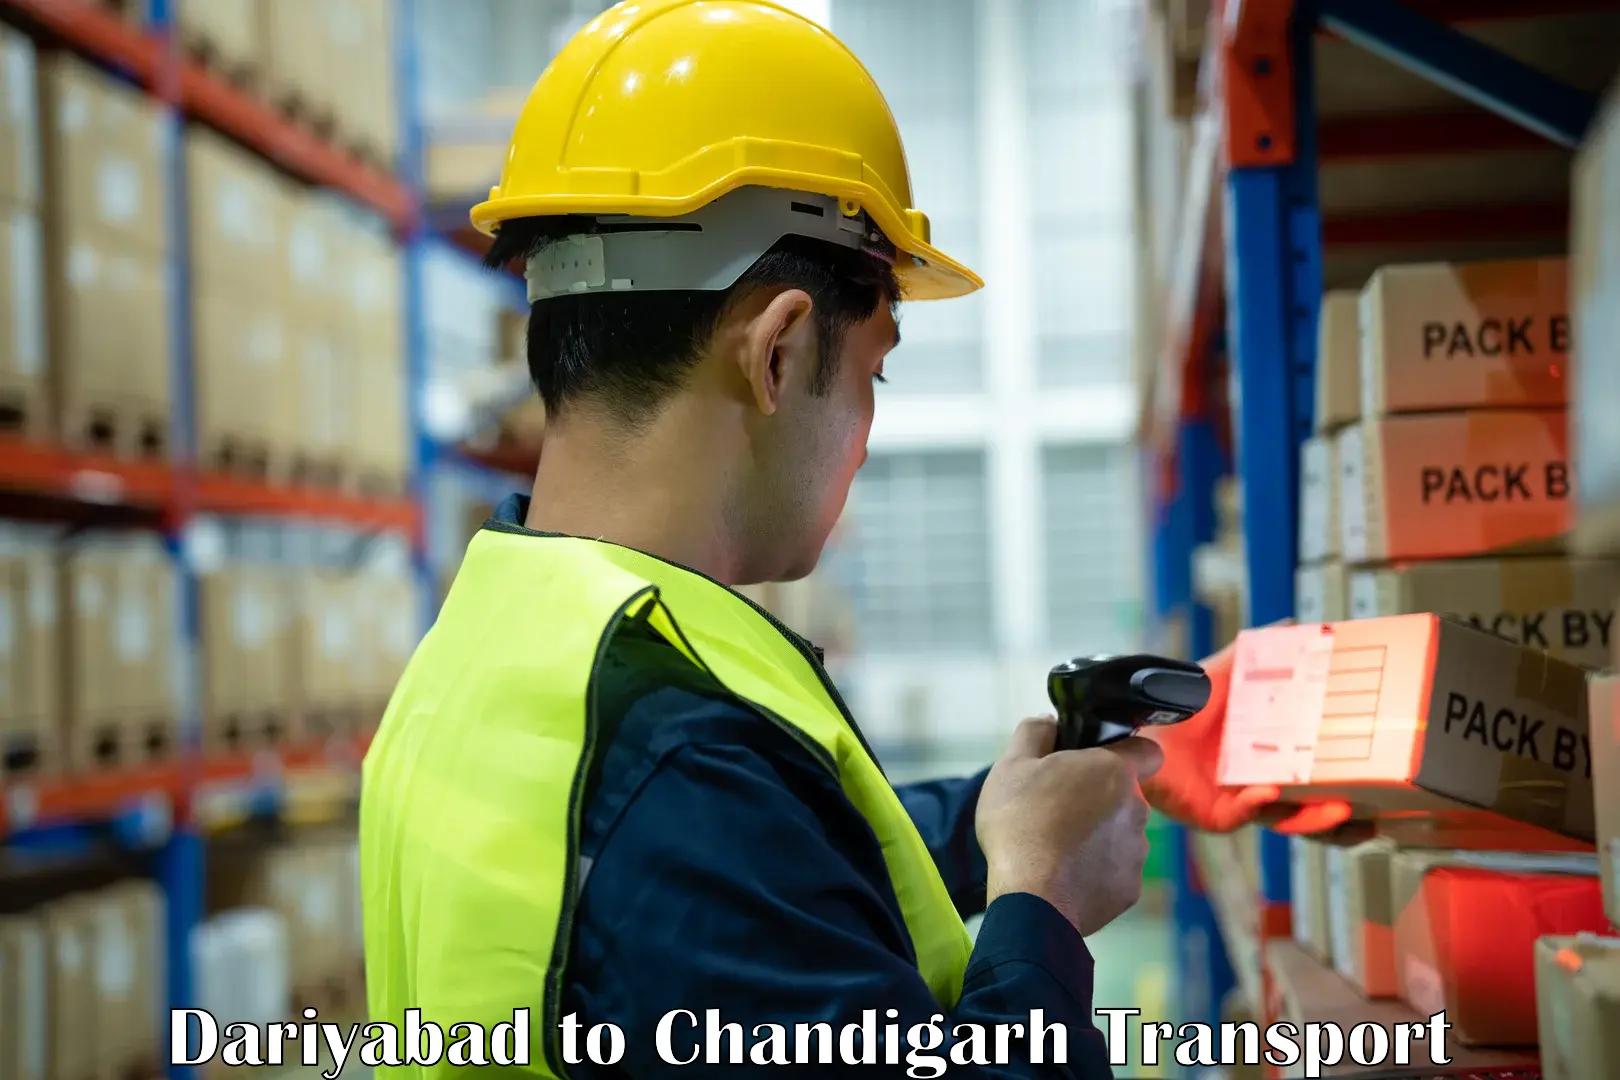 Shipping partner Dariyabad to Chandigarh